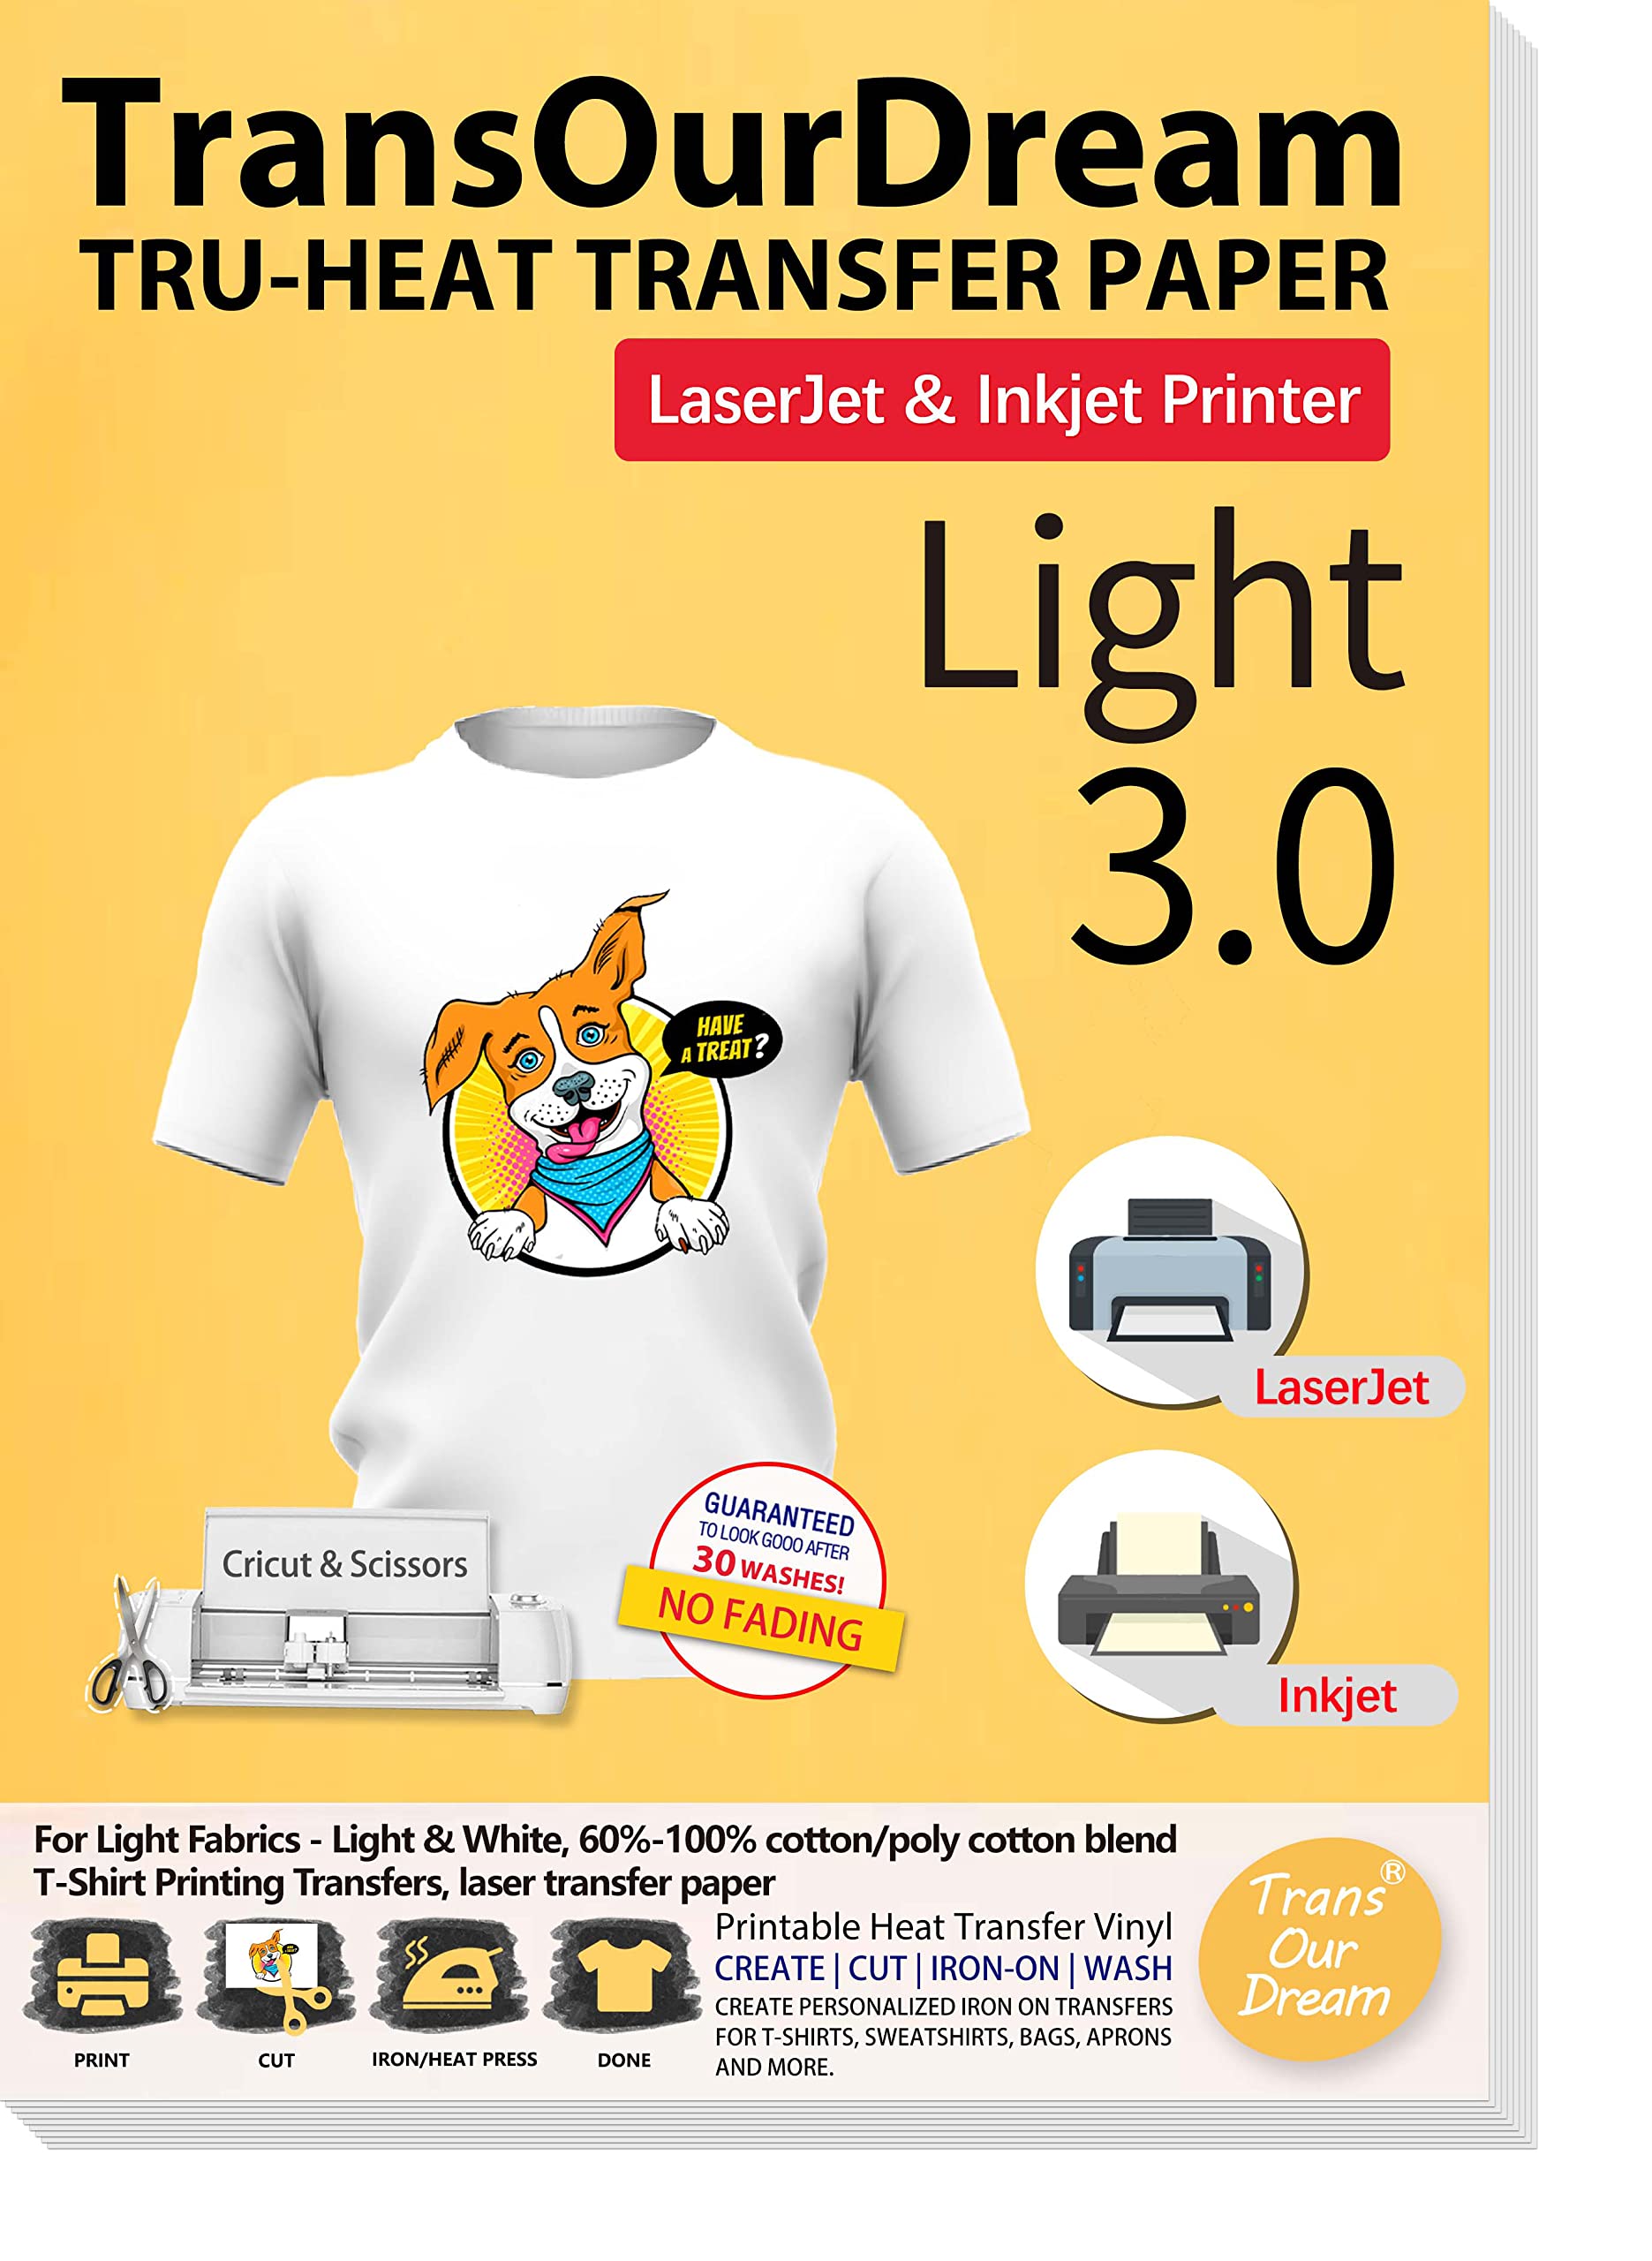 TransOurDream Iron on Heat Transfer Paper for Light T Shirts (20 Sheets  8.5x11 3.0) Printable HTV Heat Transfer Vinyl for Inkjet & Laserjet Printer  Iron On transfers for T Shirts (TRANS-L3-1-20)